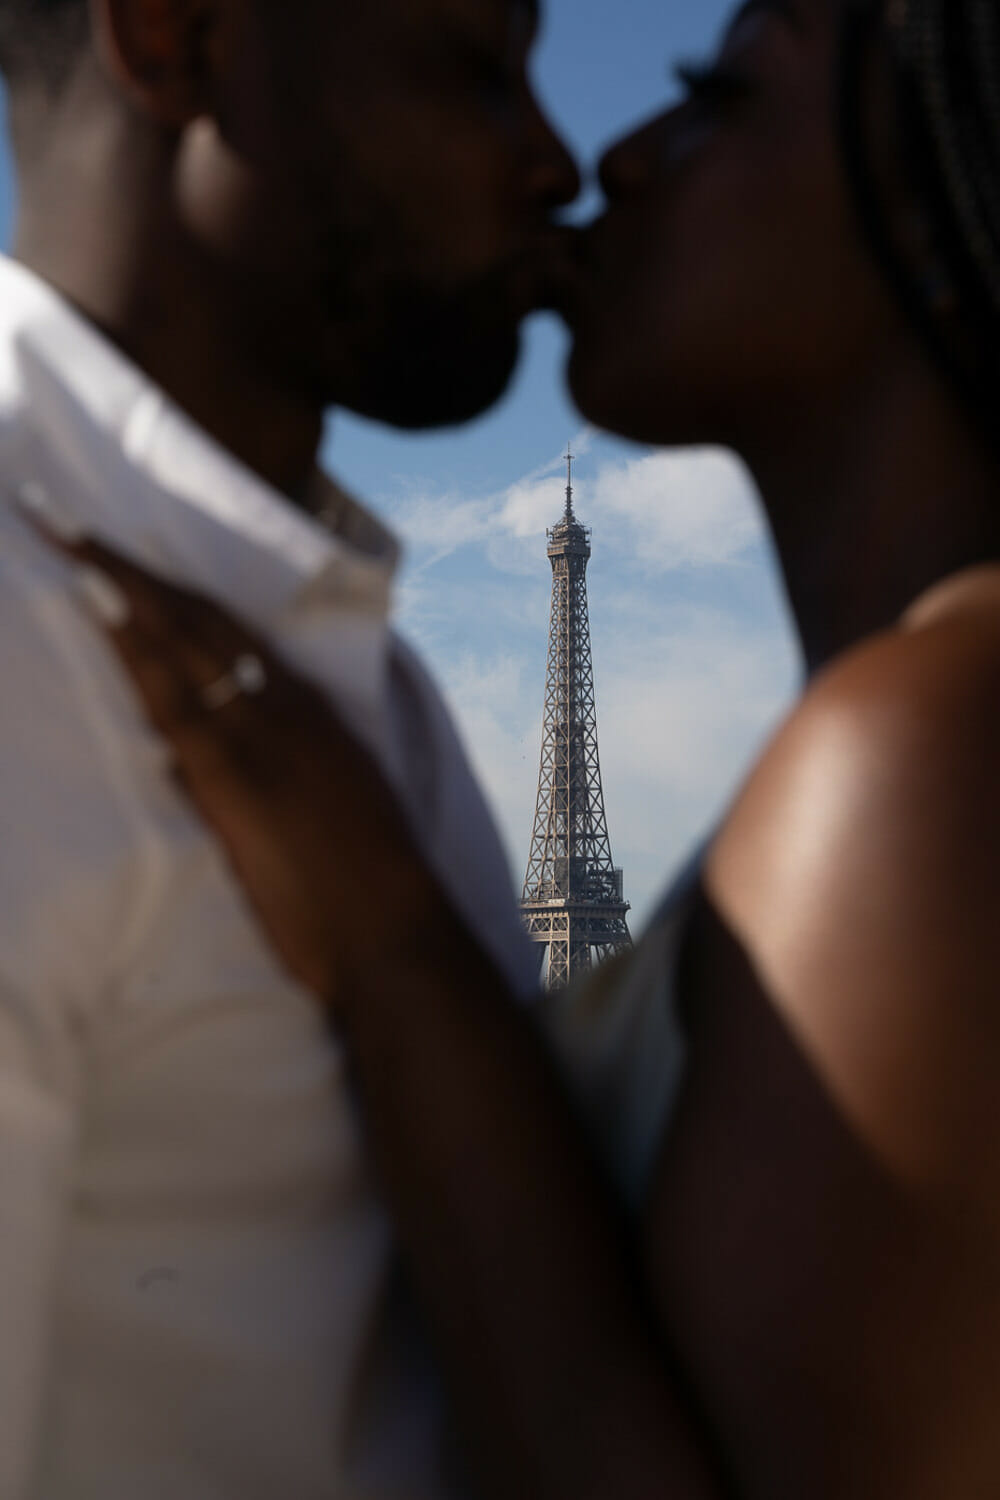 Eiffel Tower photoshoot